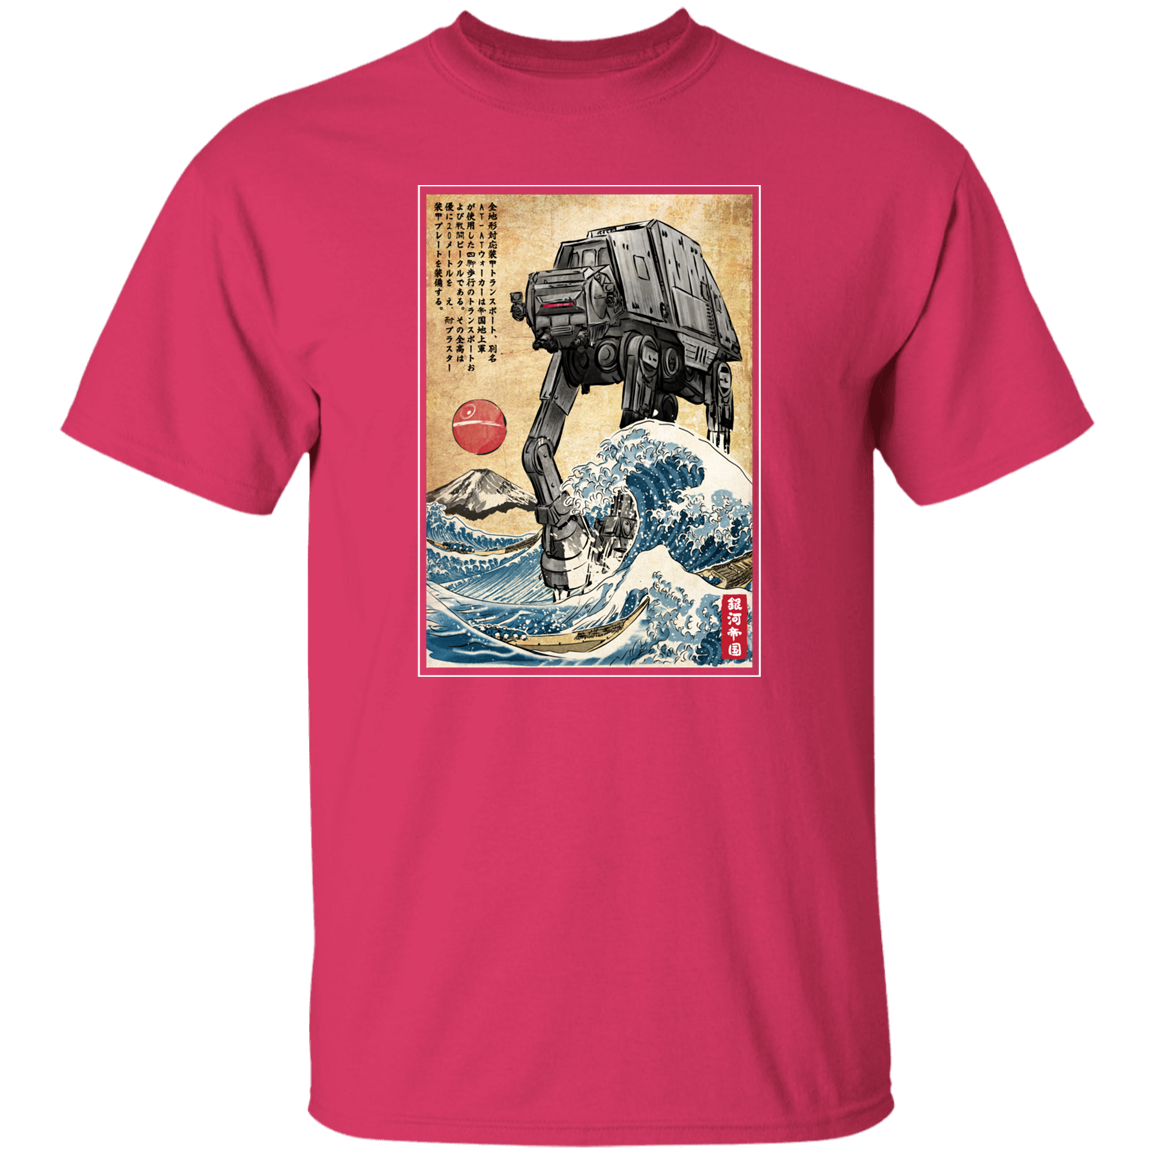 Galactic Empire in Japan T-Shirt